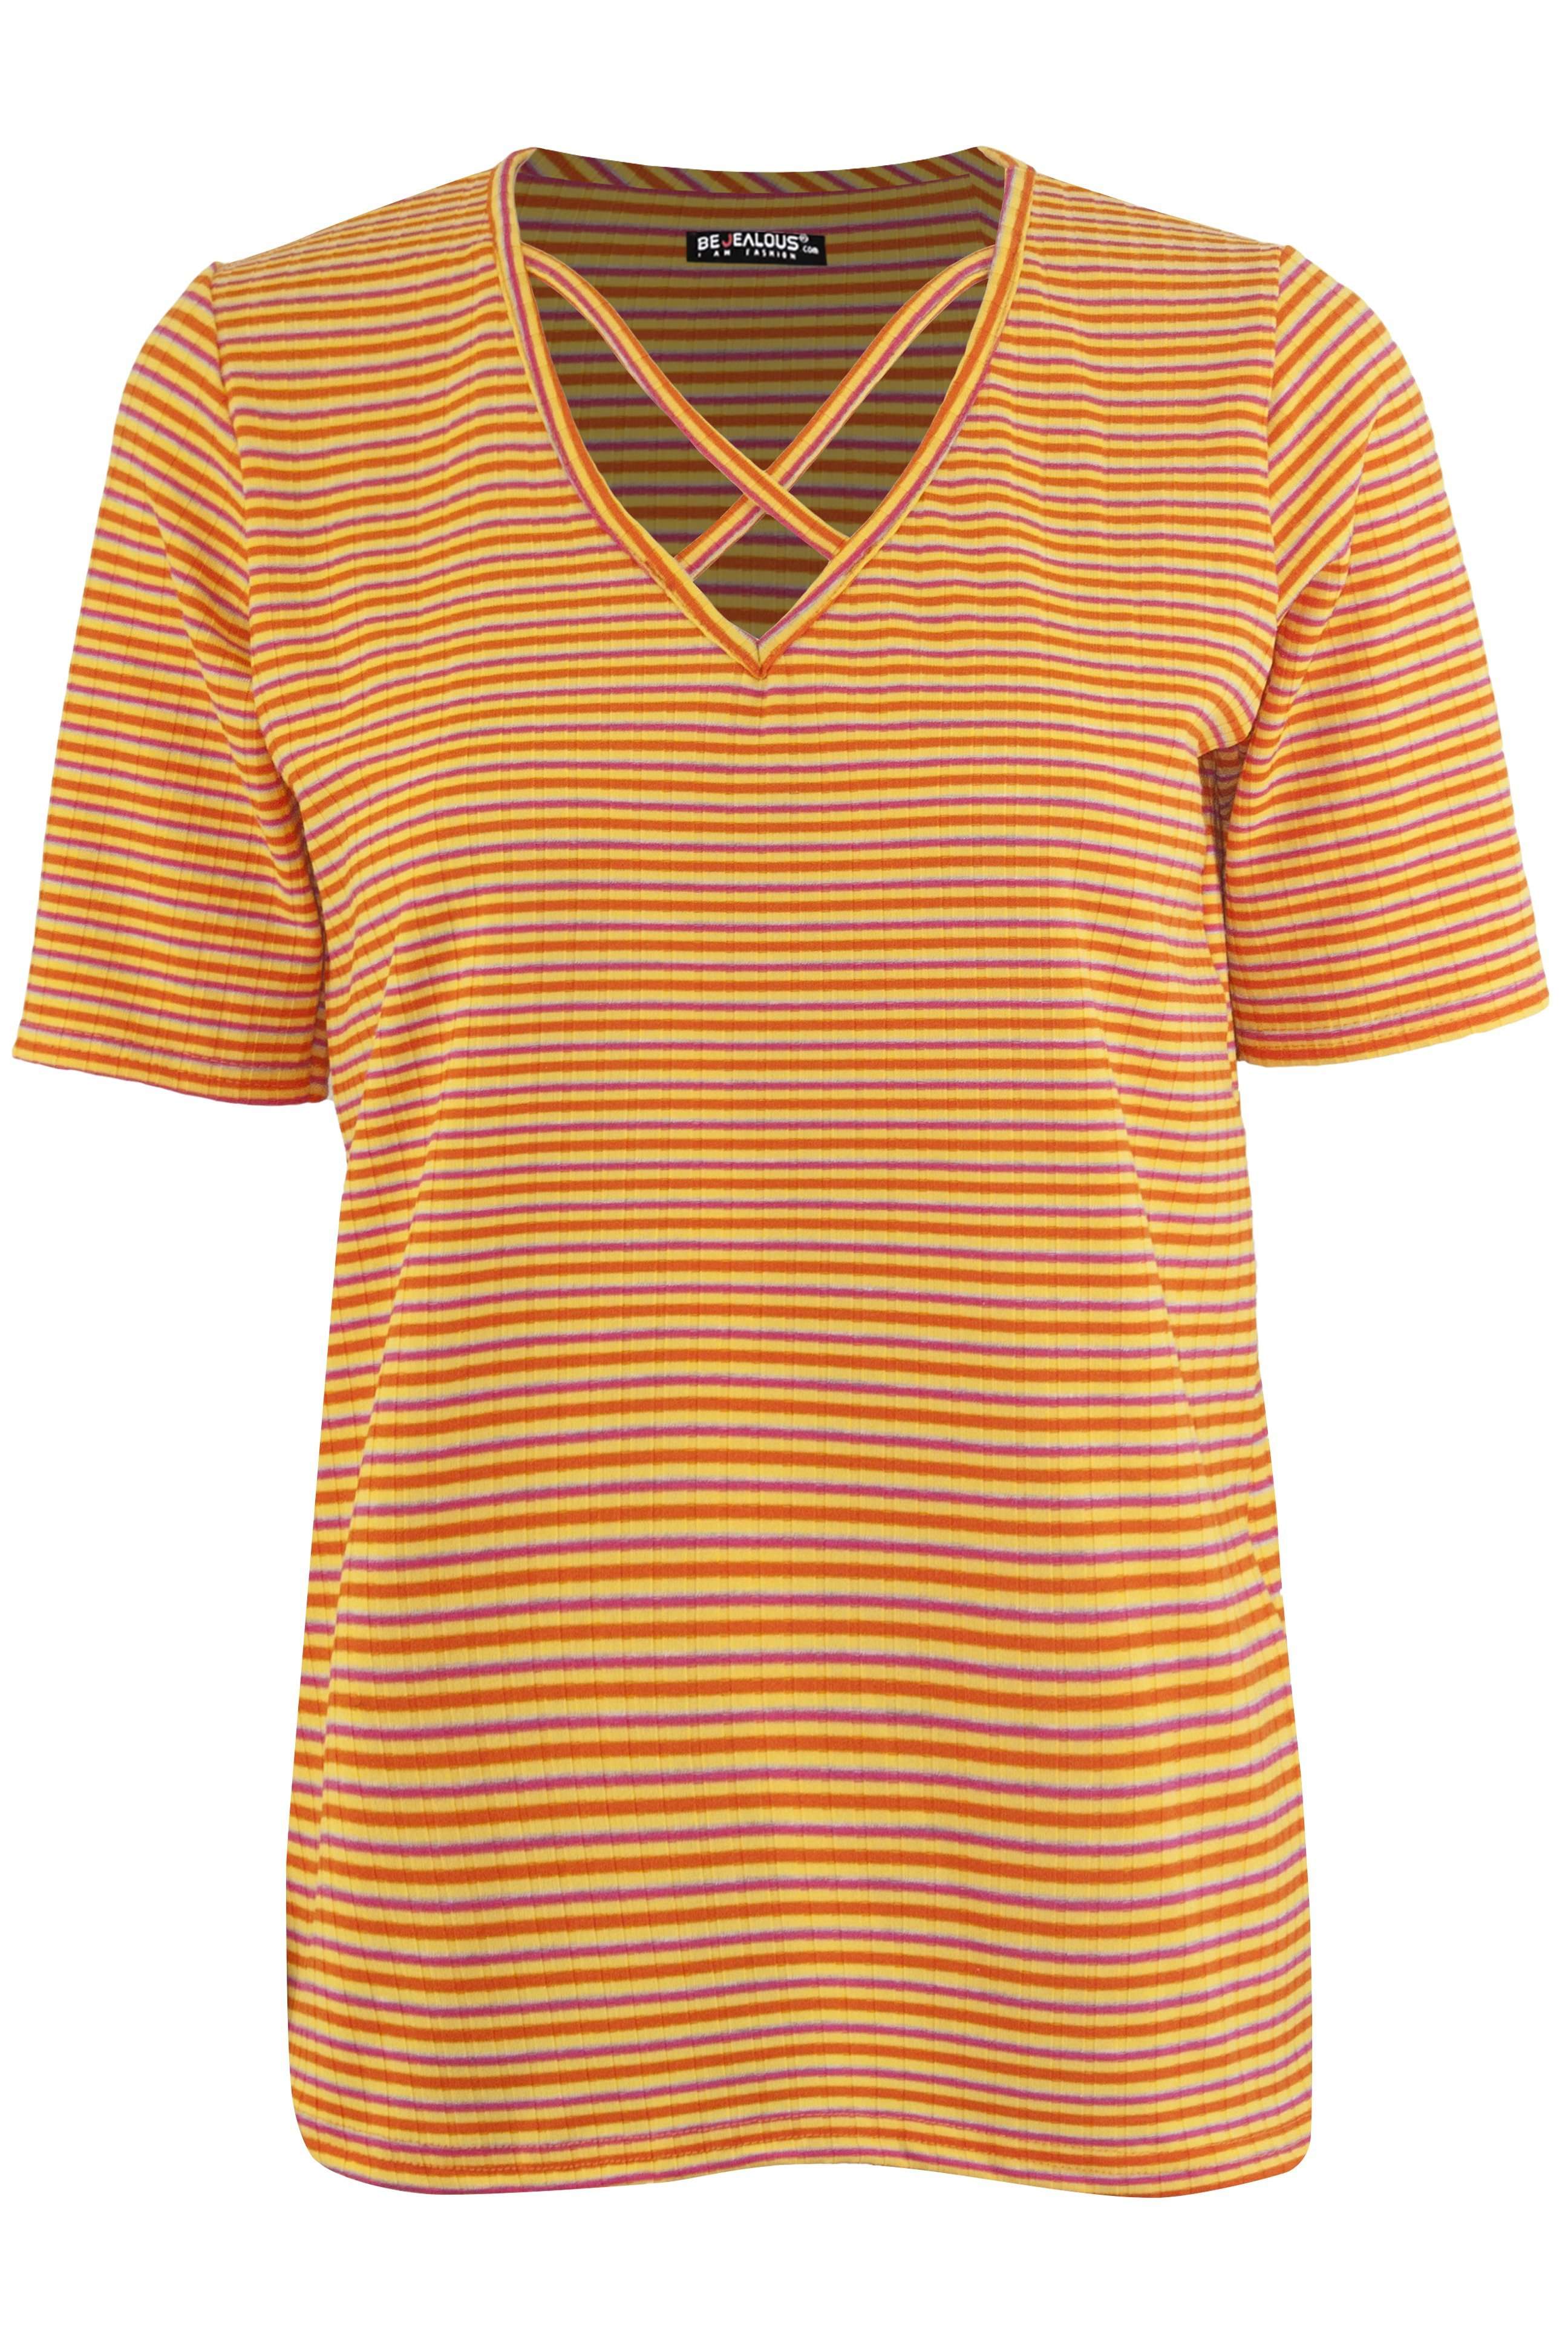 Kaya Mulitcolour Striped Strappy Baggy Tshirt - bejealous-com